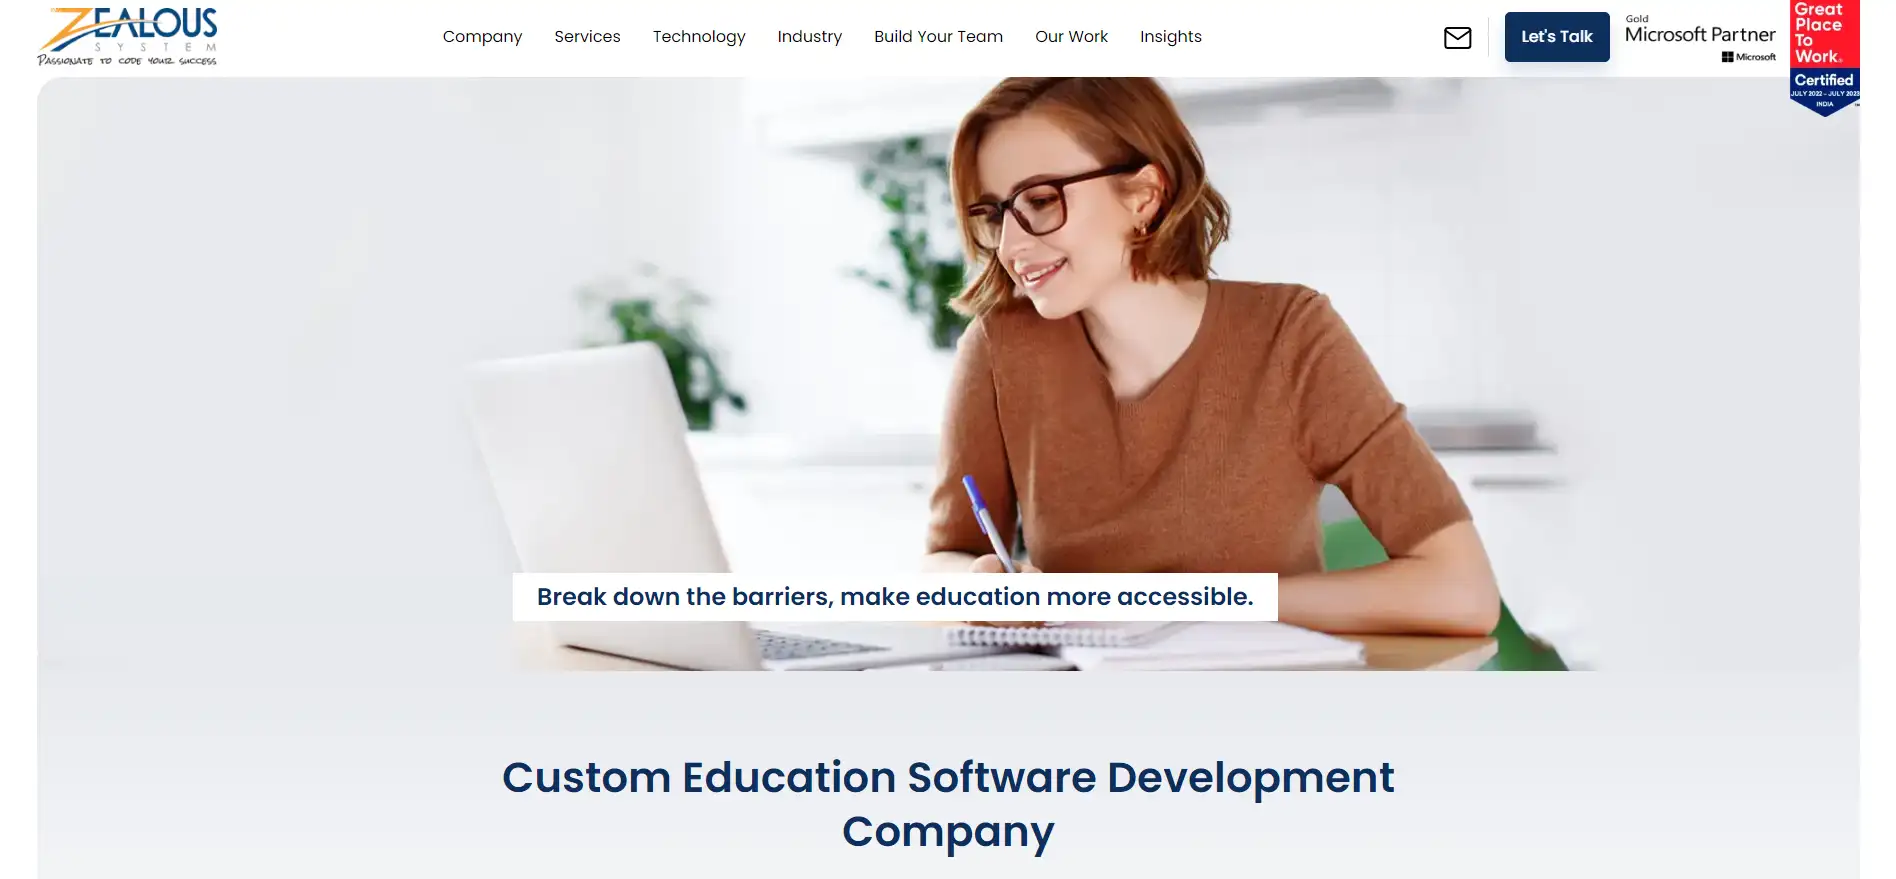 education software development company - Zealous System